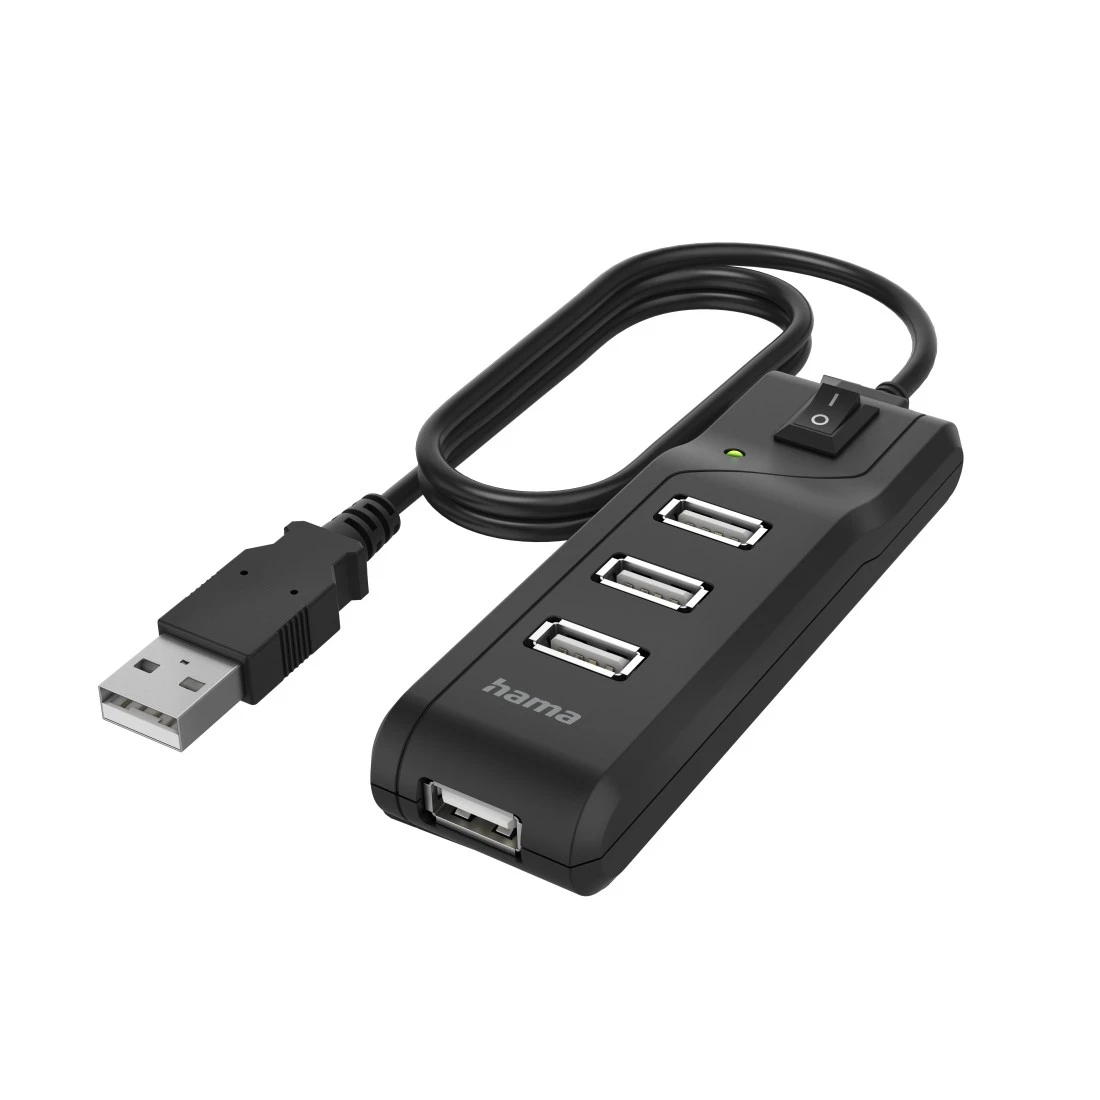 Concentrador USB, 4 puertos, USB 2.0, 480 Mbit/s, interruptor on/off